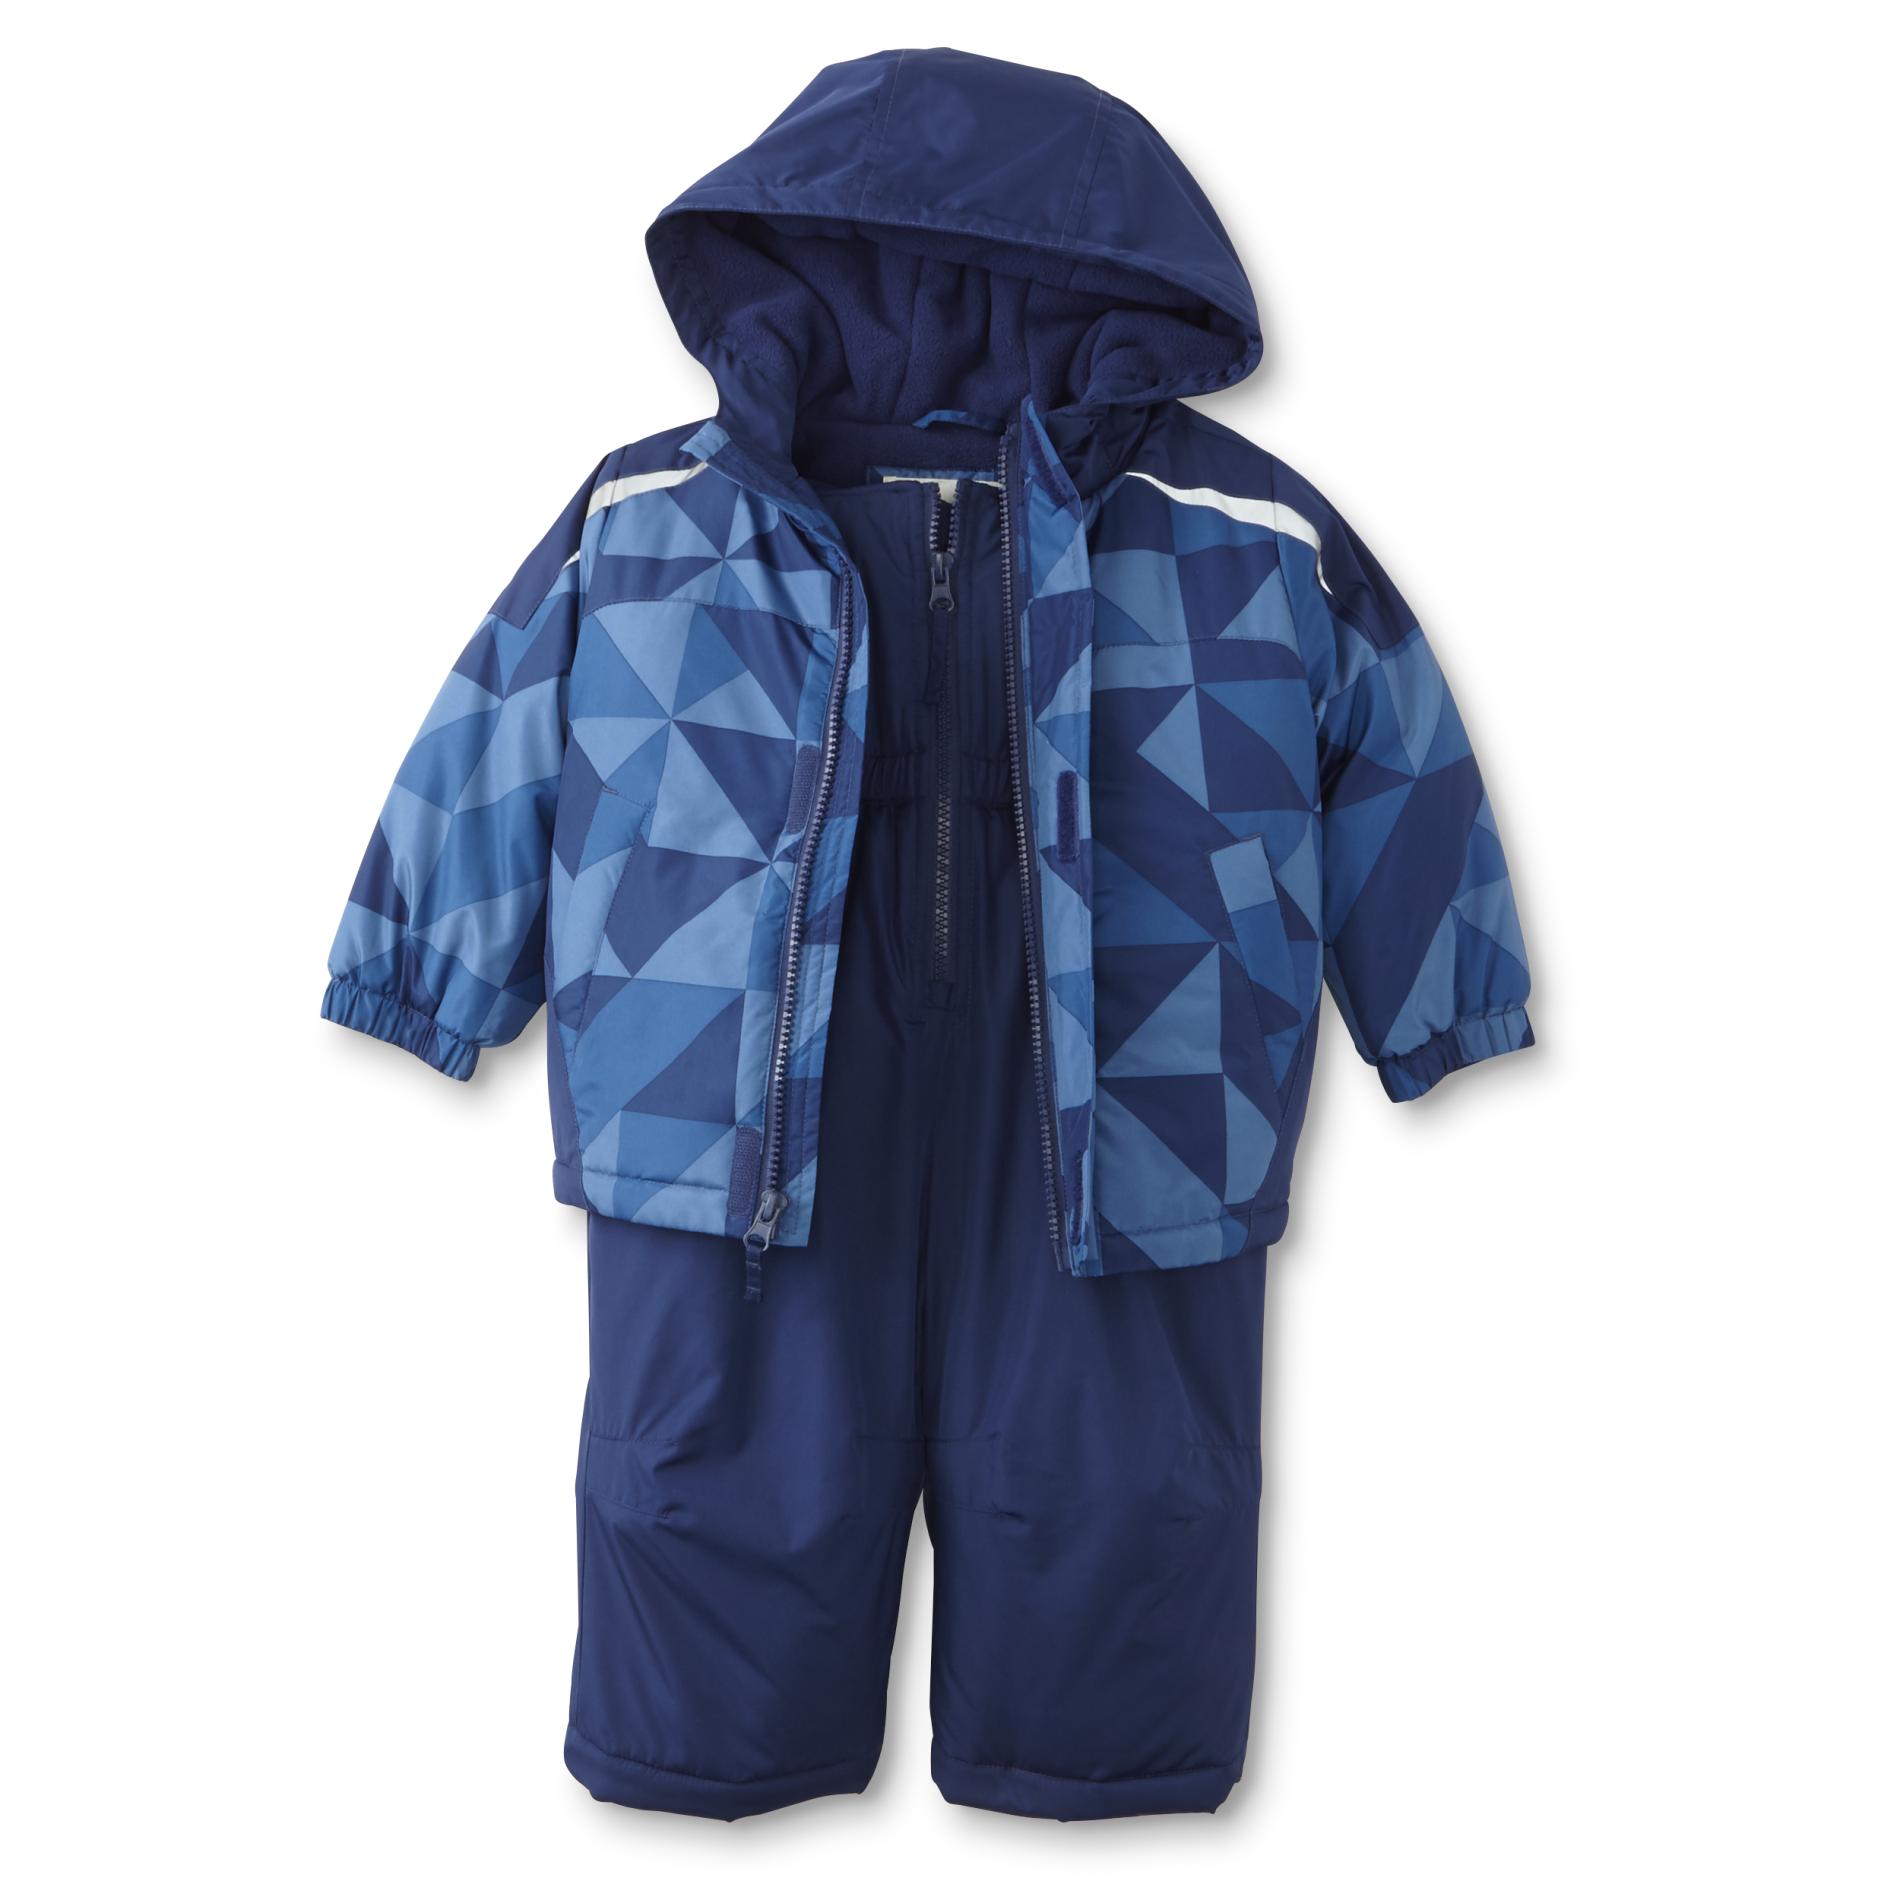 Toughskins Infant Boy's Winter Coat & Snow Pants - Geometric